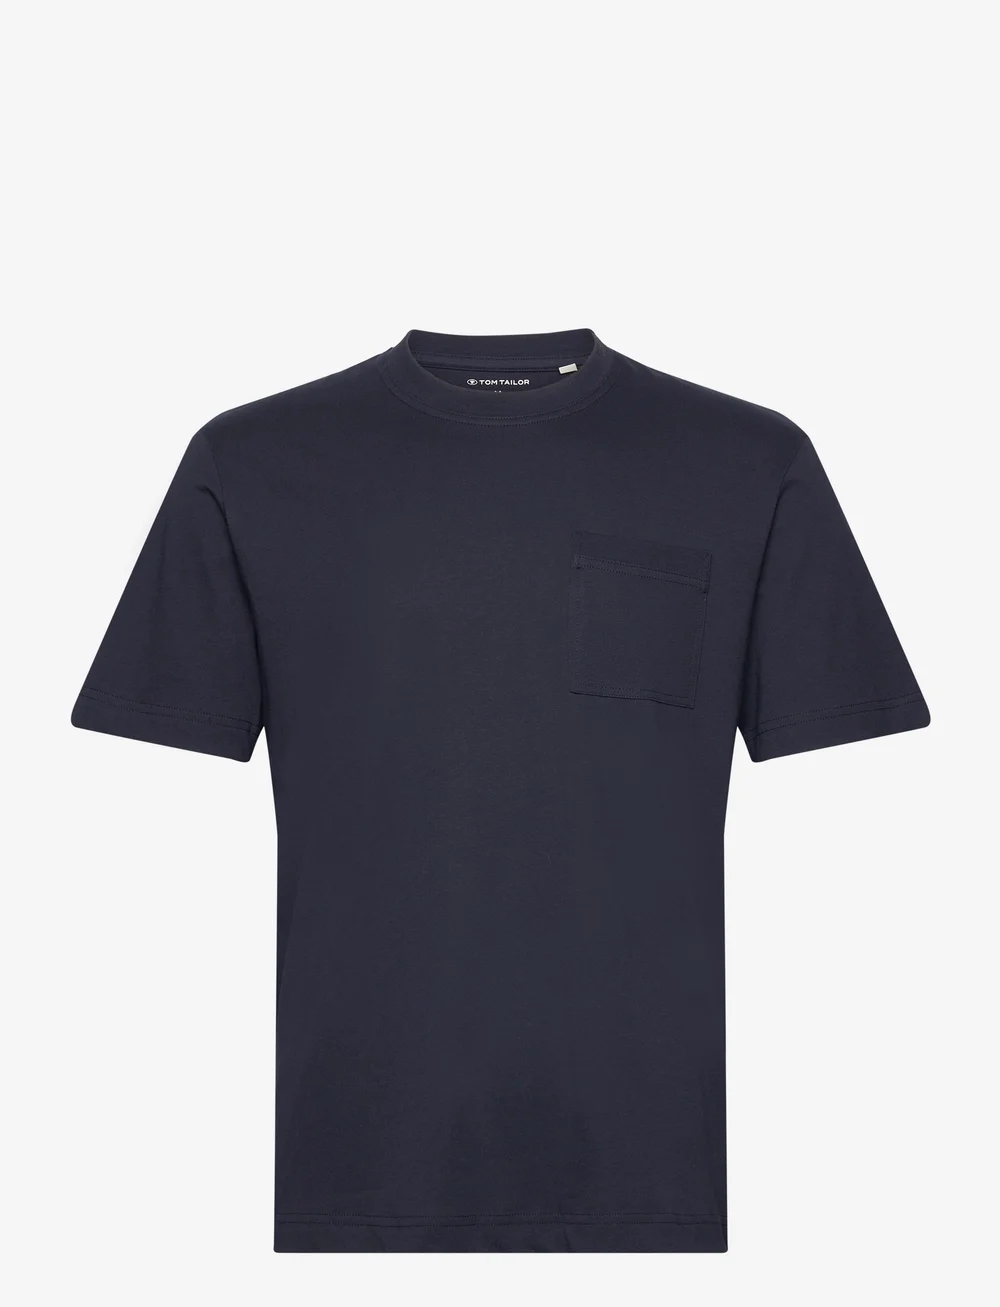 Tom Tailor Basic T-shirt With Pocket – t-shirts – shop at Booztlet